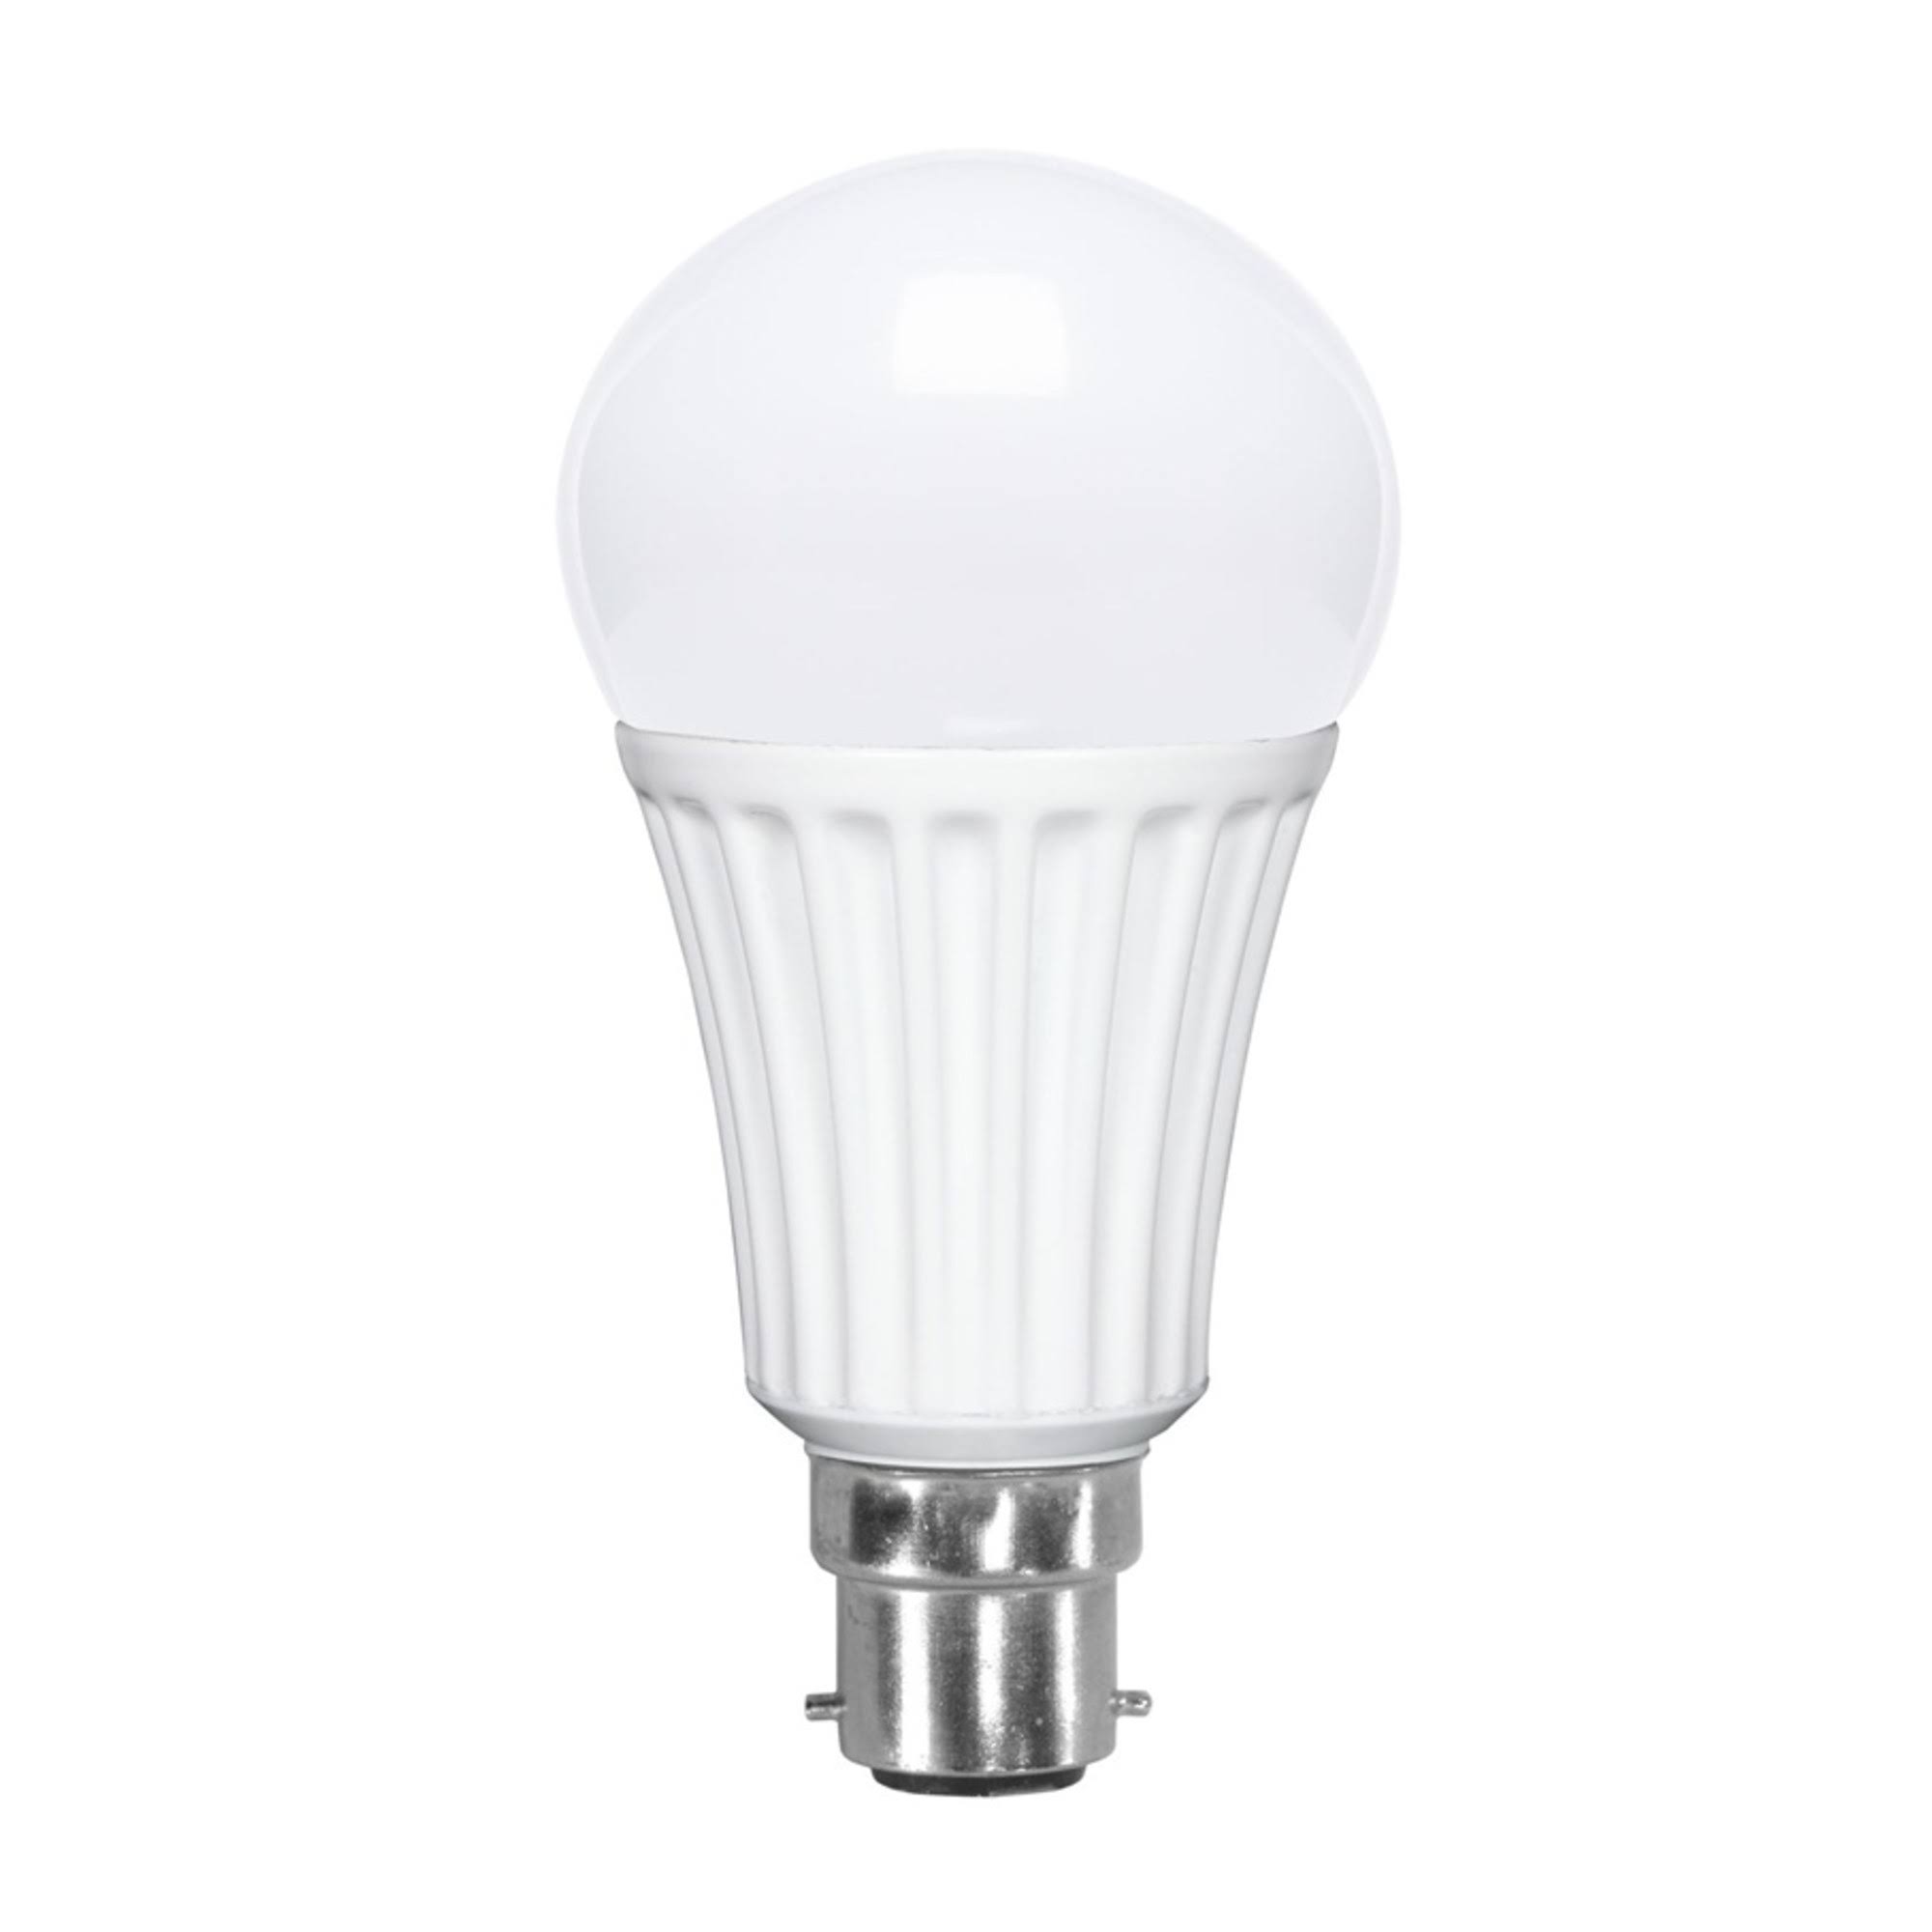 TCP BC 13.5 / 15W LED GLS Warm White Lamp